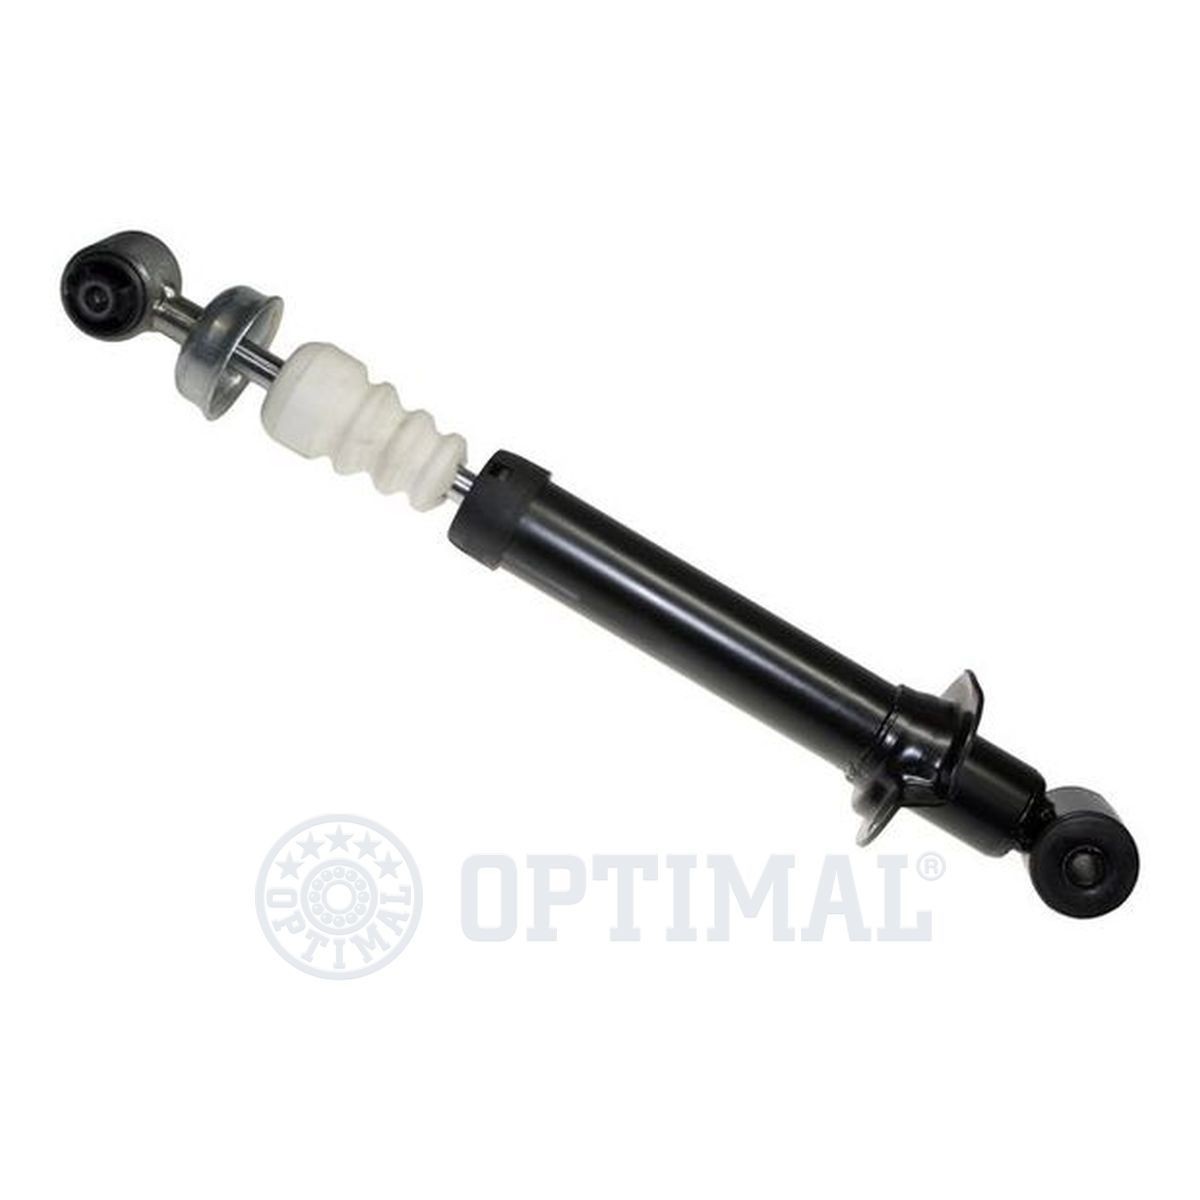 OPTIMAL A-1208G Shock absorber Rear Axle, Gas Pressure, Spring-bearing Damper, Top eye, Bottom eye